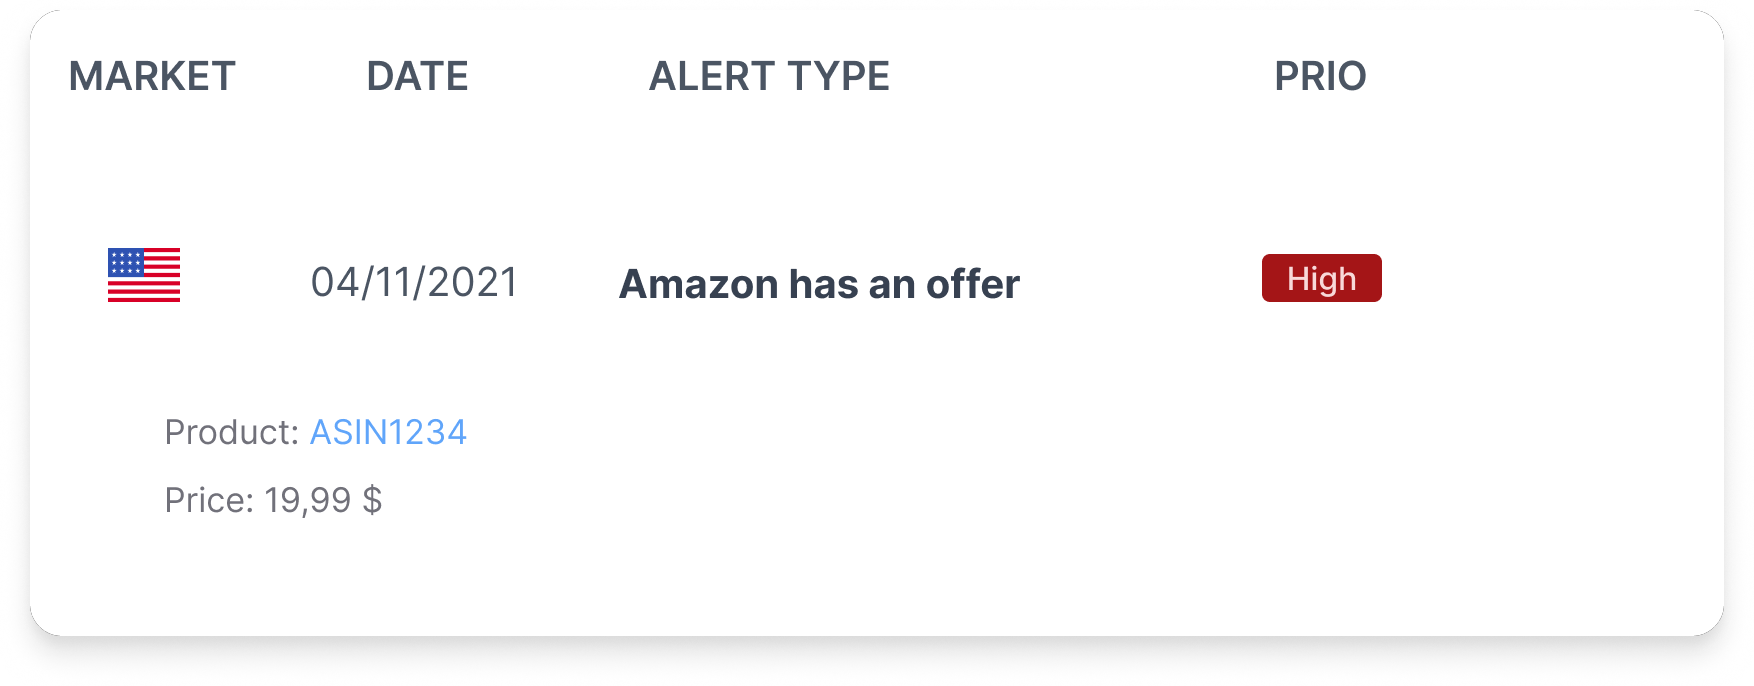 Amazon Alert SKU price range anomaly additional information